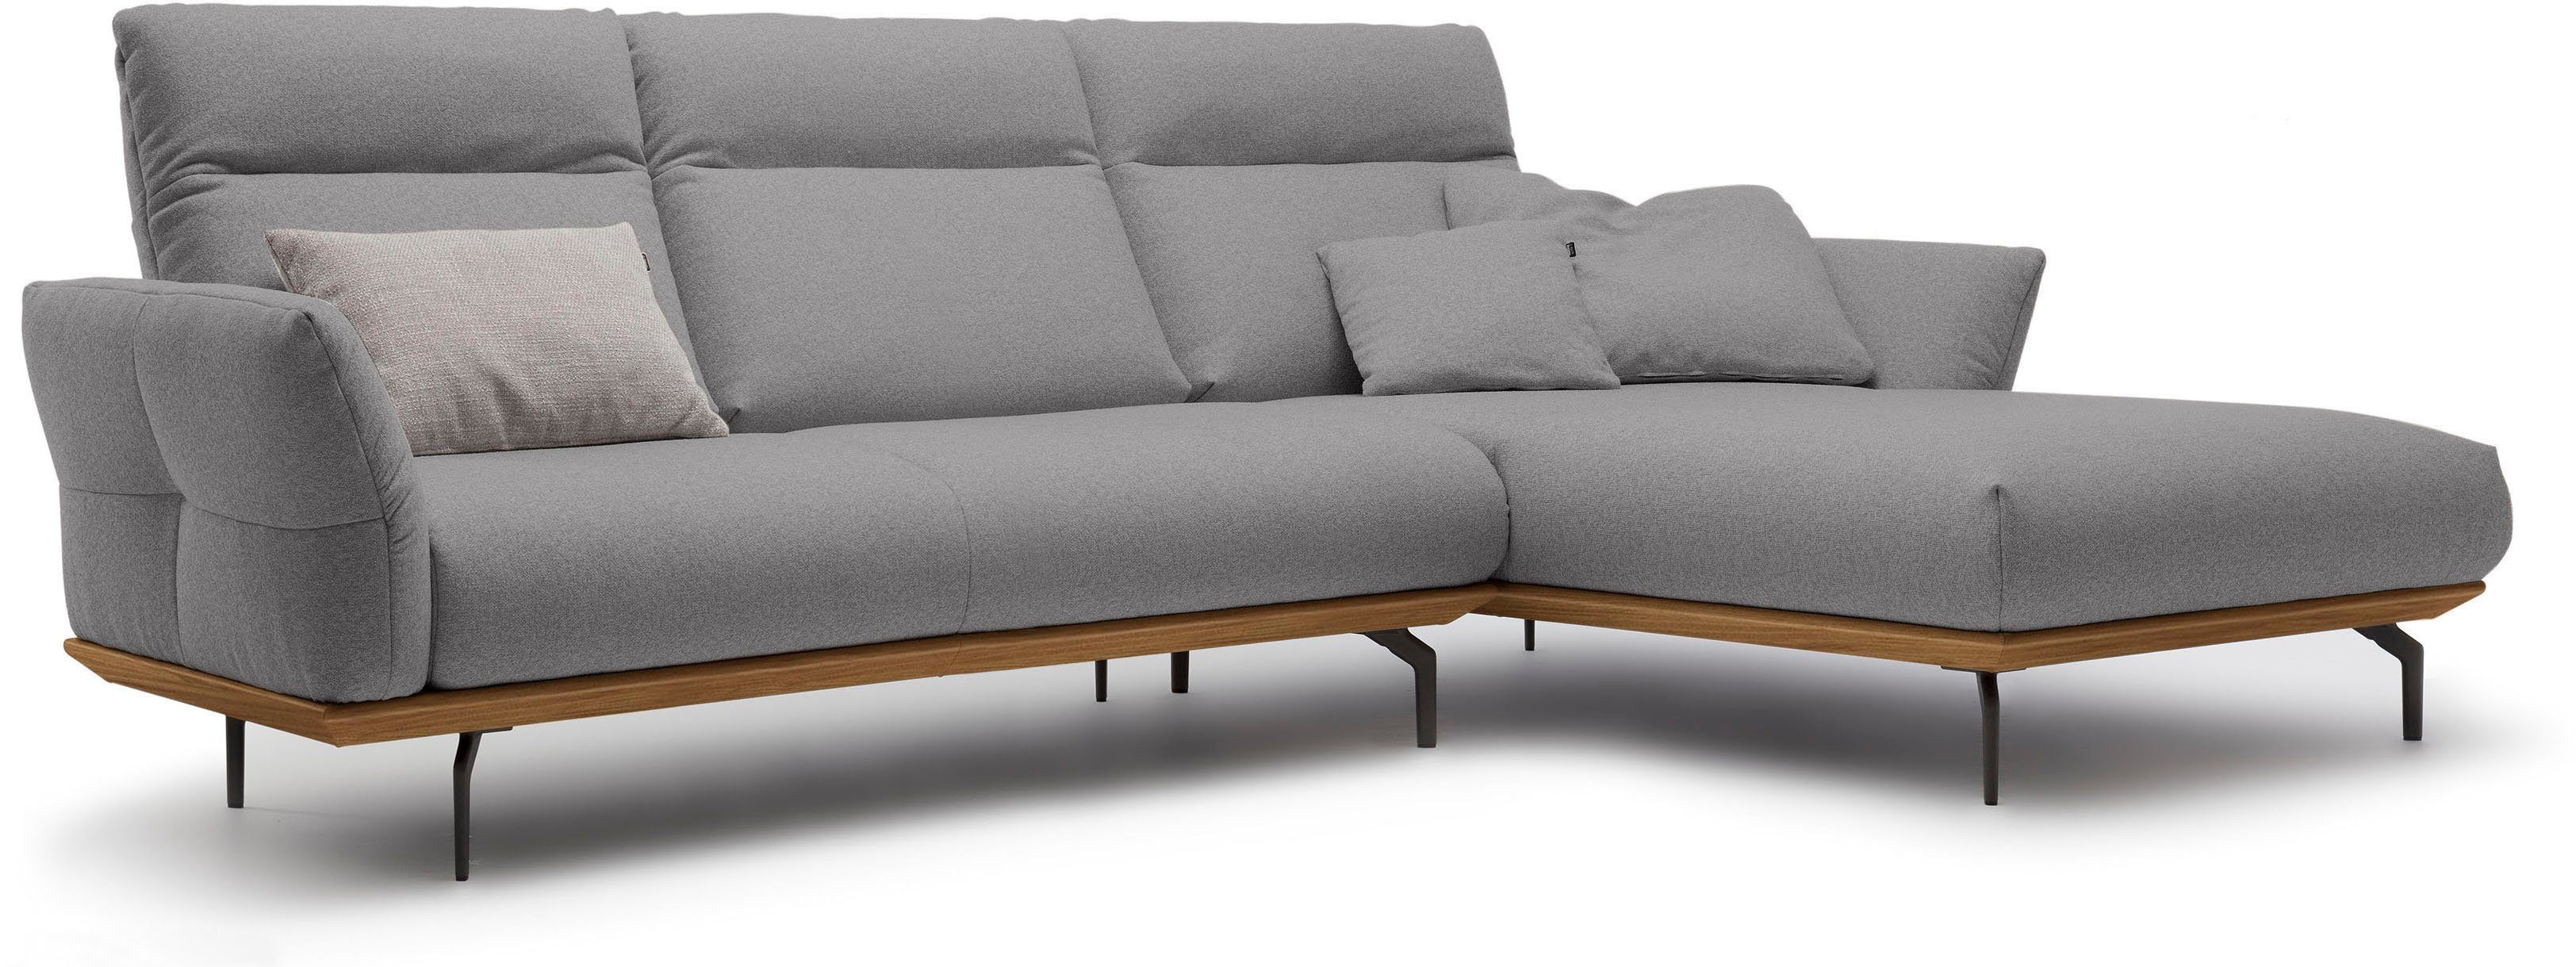 sofa Breite in in Winkelfüße hülsta Ecksofa Nussbaum, cm 298 Sockel hs.460, Umbragrau,